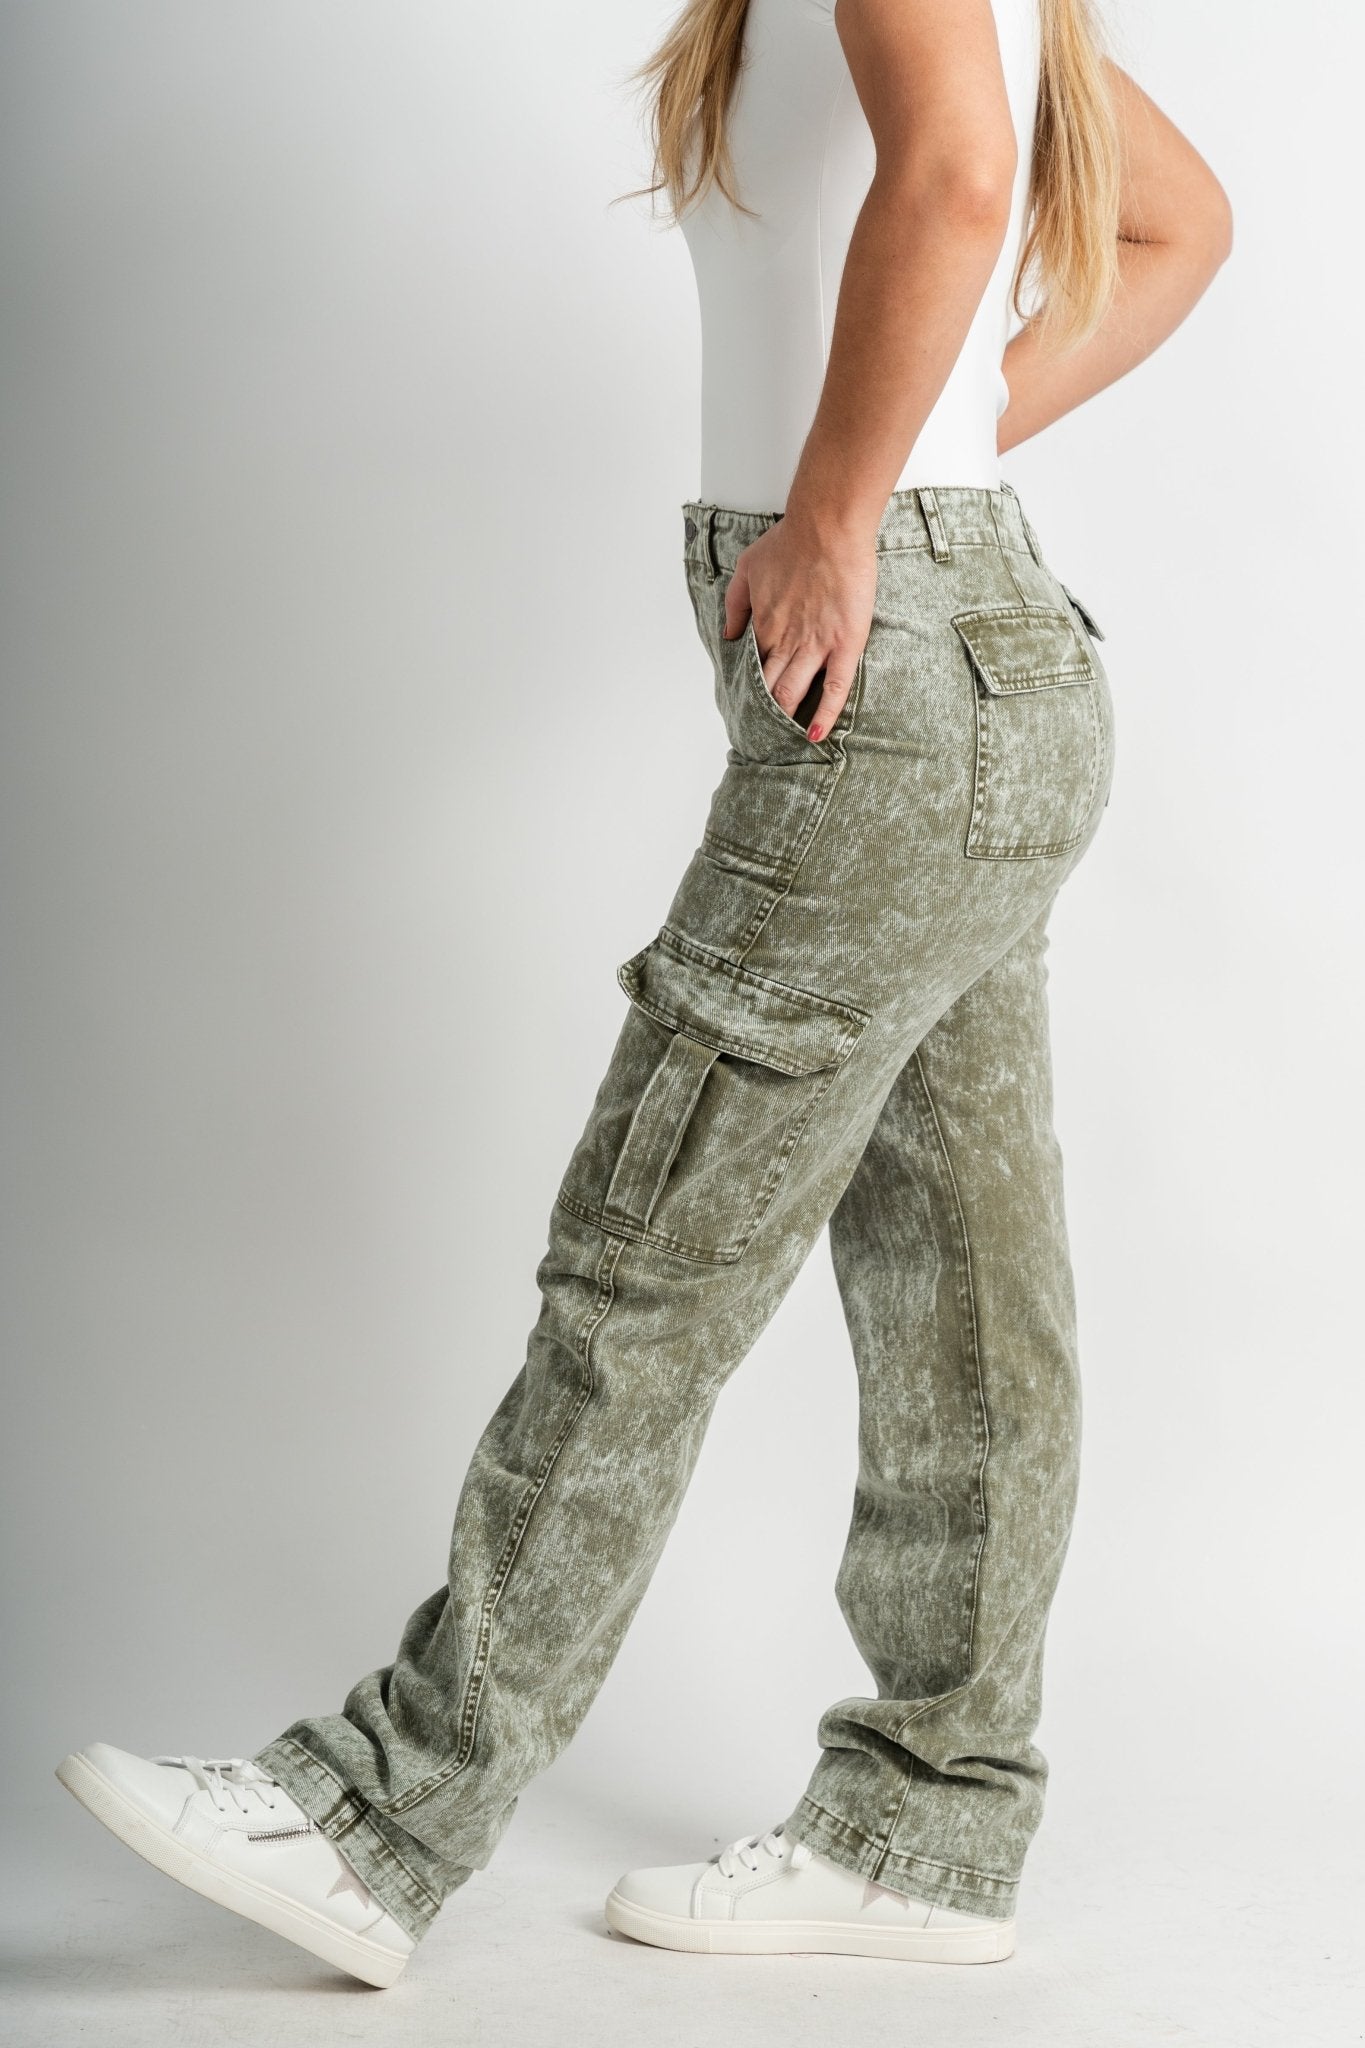 Daze denim high flare jeans slay | Trendy Jeans - Lush Fashion Lounge